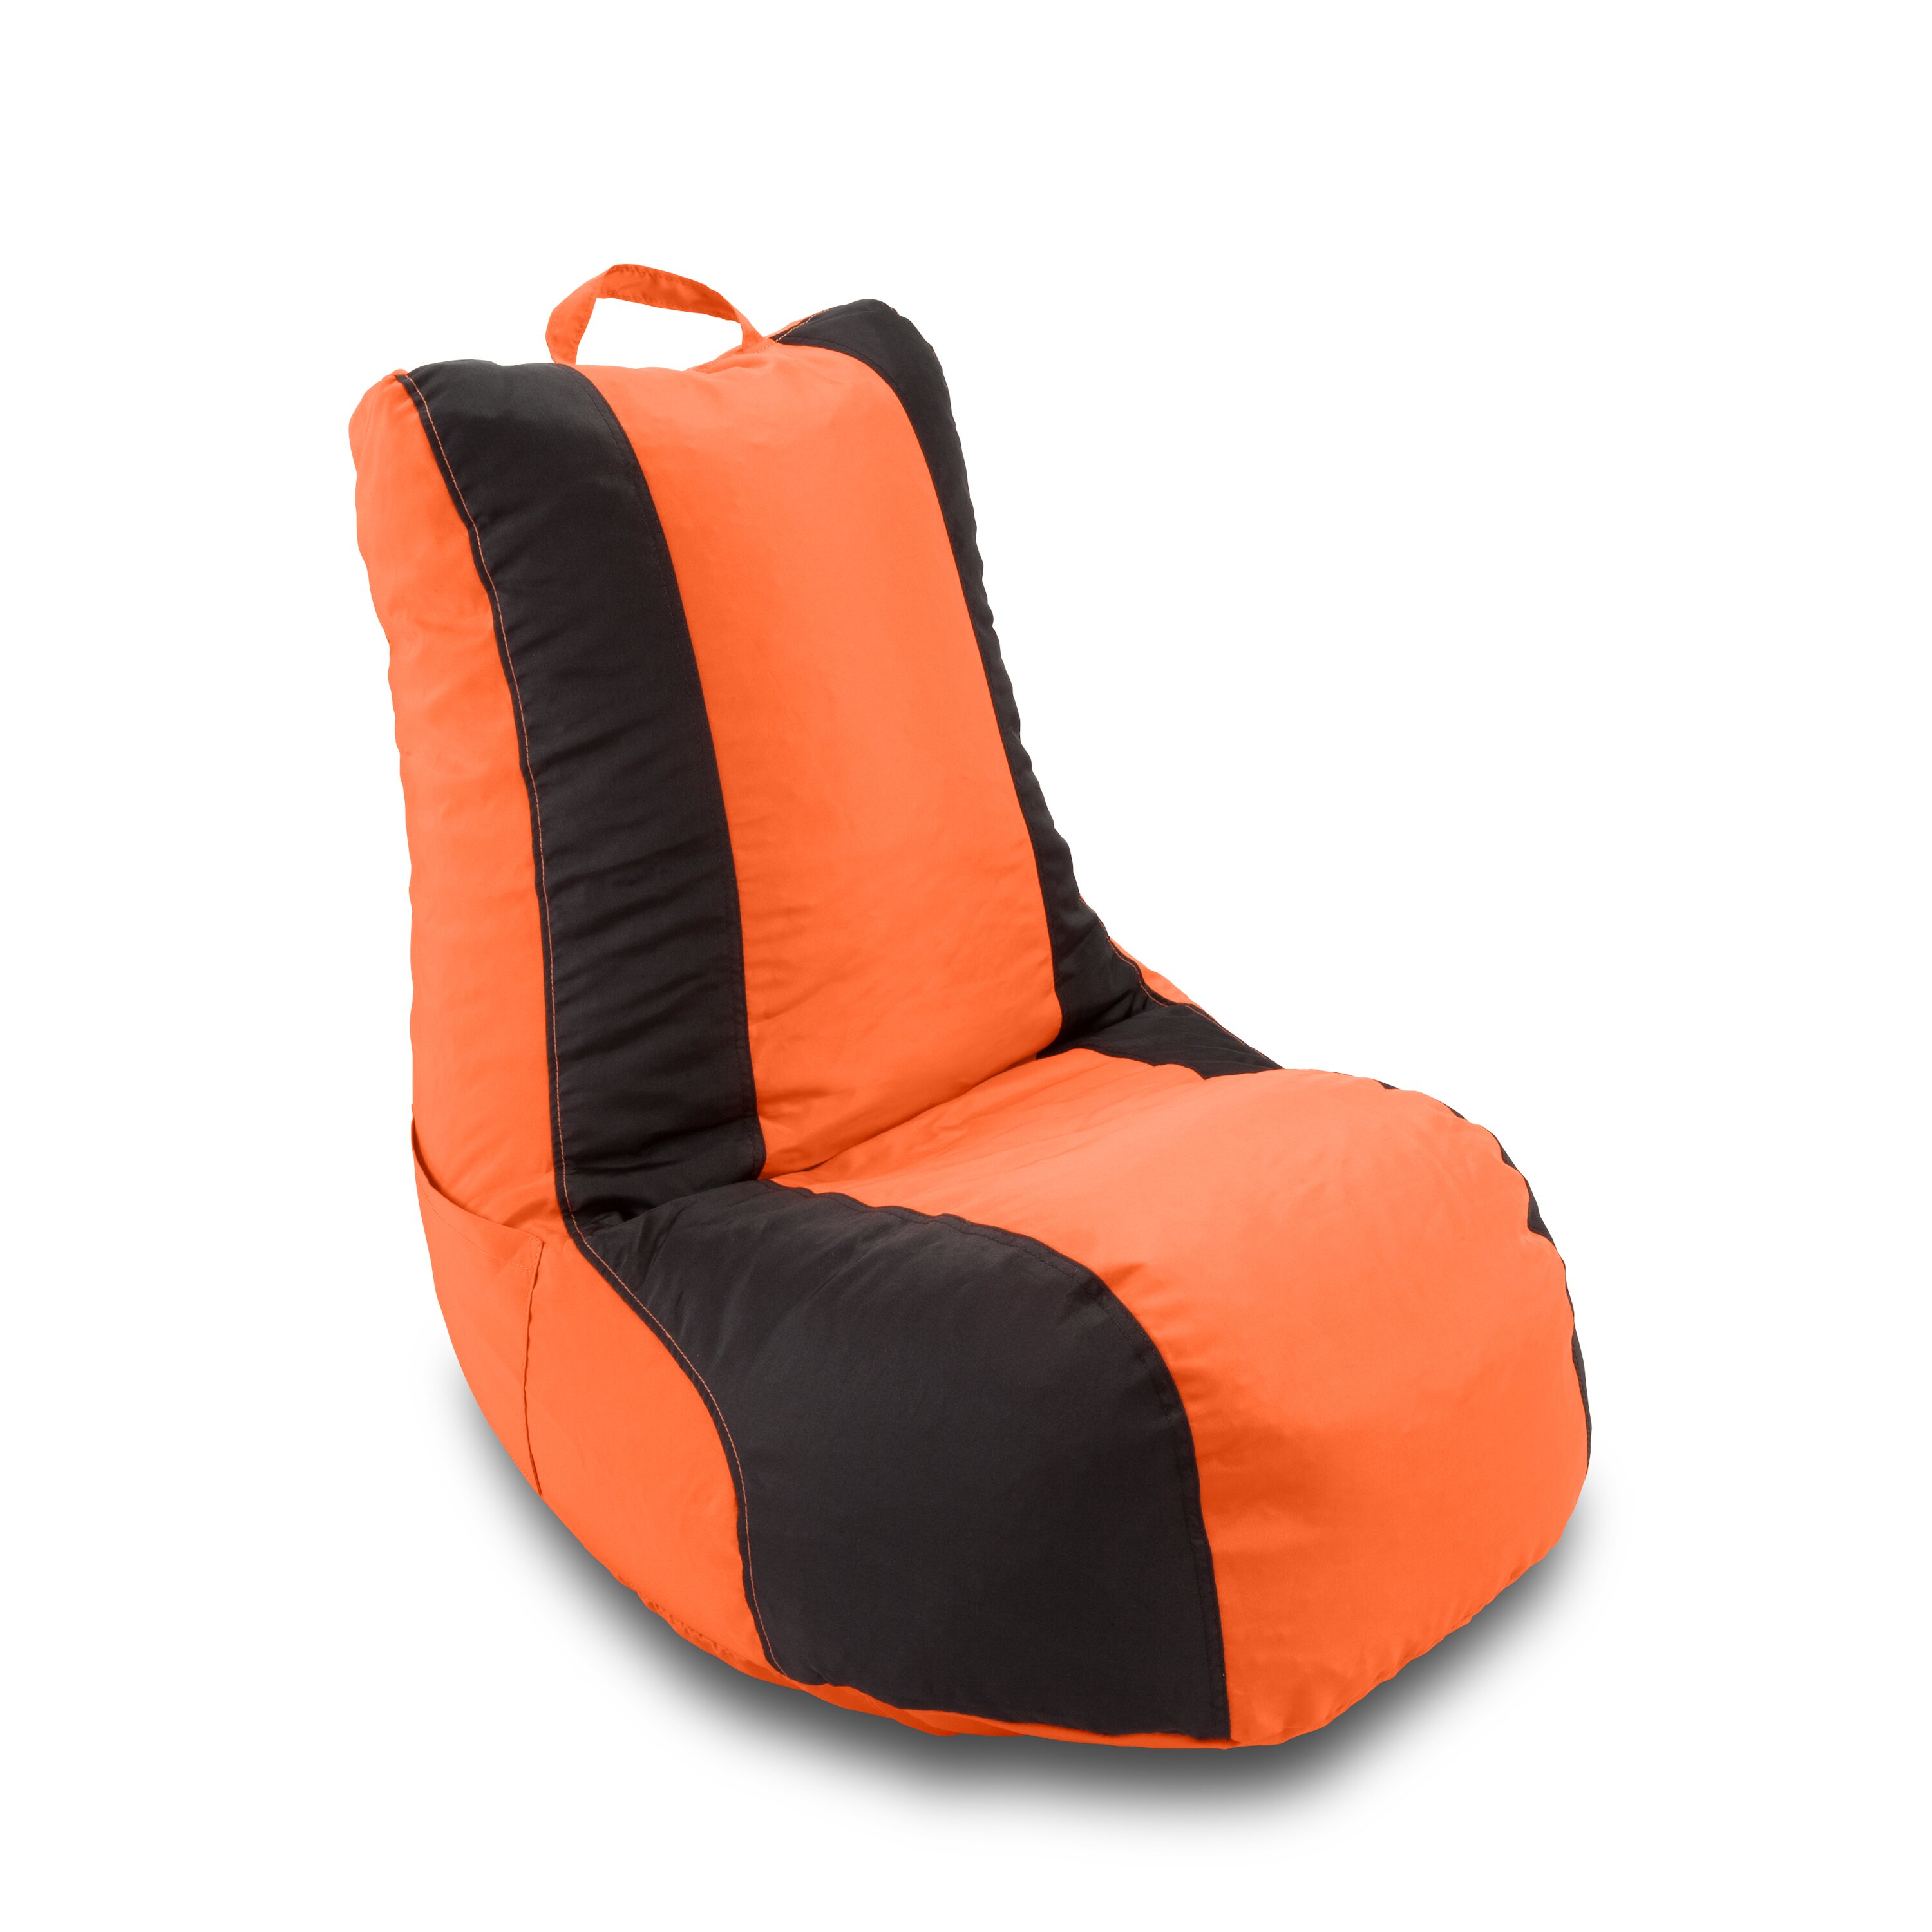 X Rocker Ace Bayou Bean Bag Chair 941 